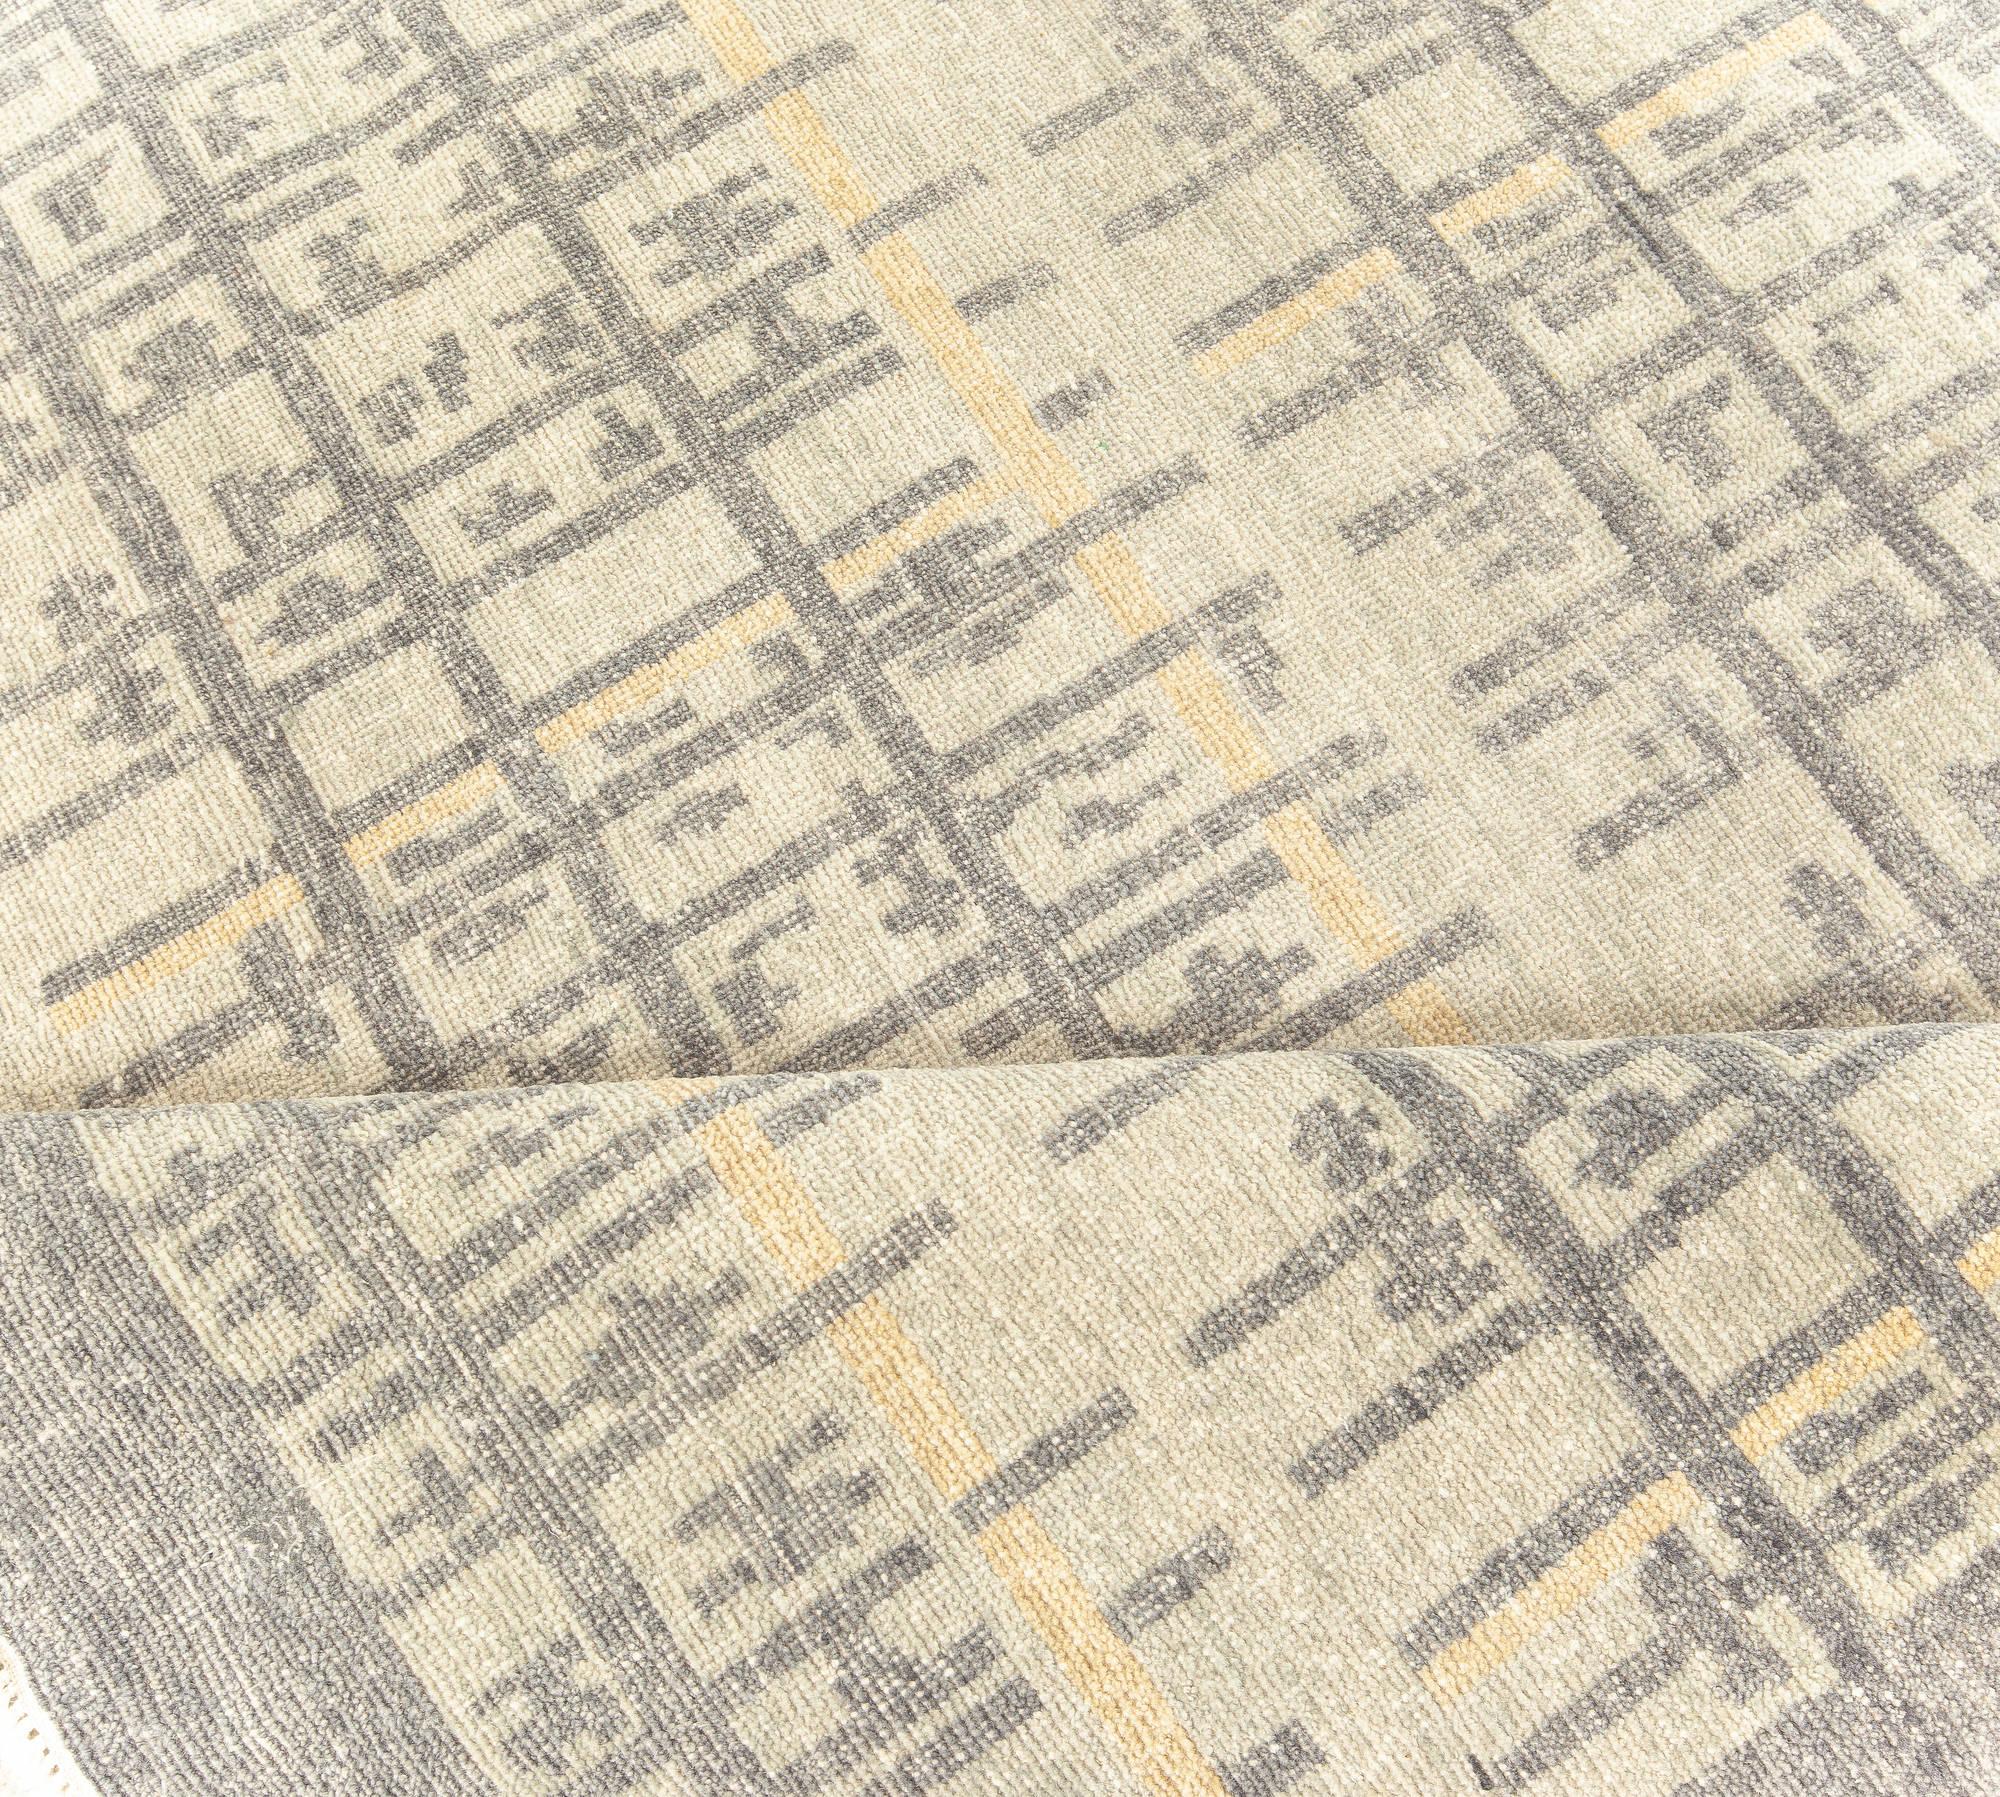 High-quality contemporary geometric rug by Doris Leslie Blau.
Size: 11'6